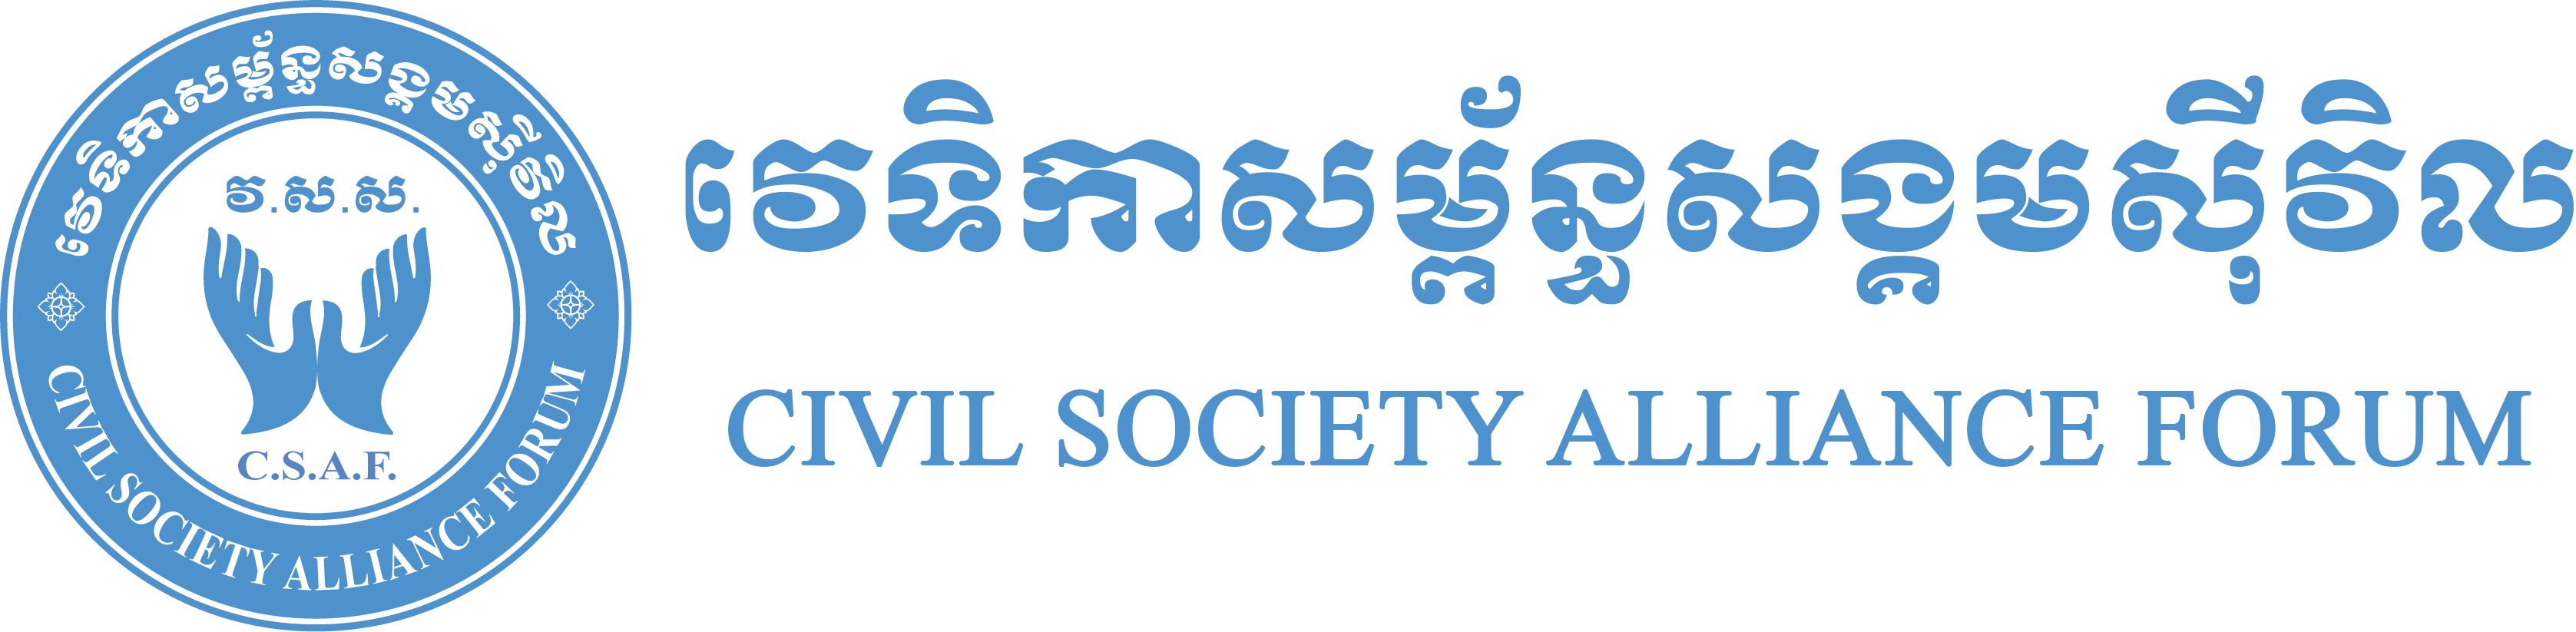 Civil Society Alliance Forum